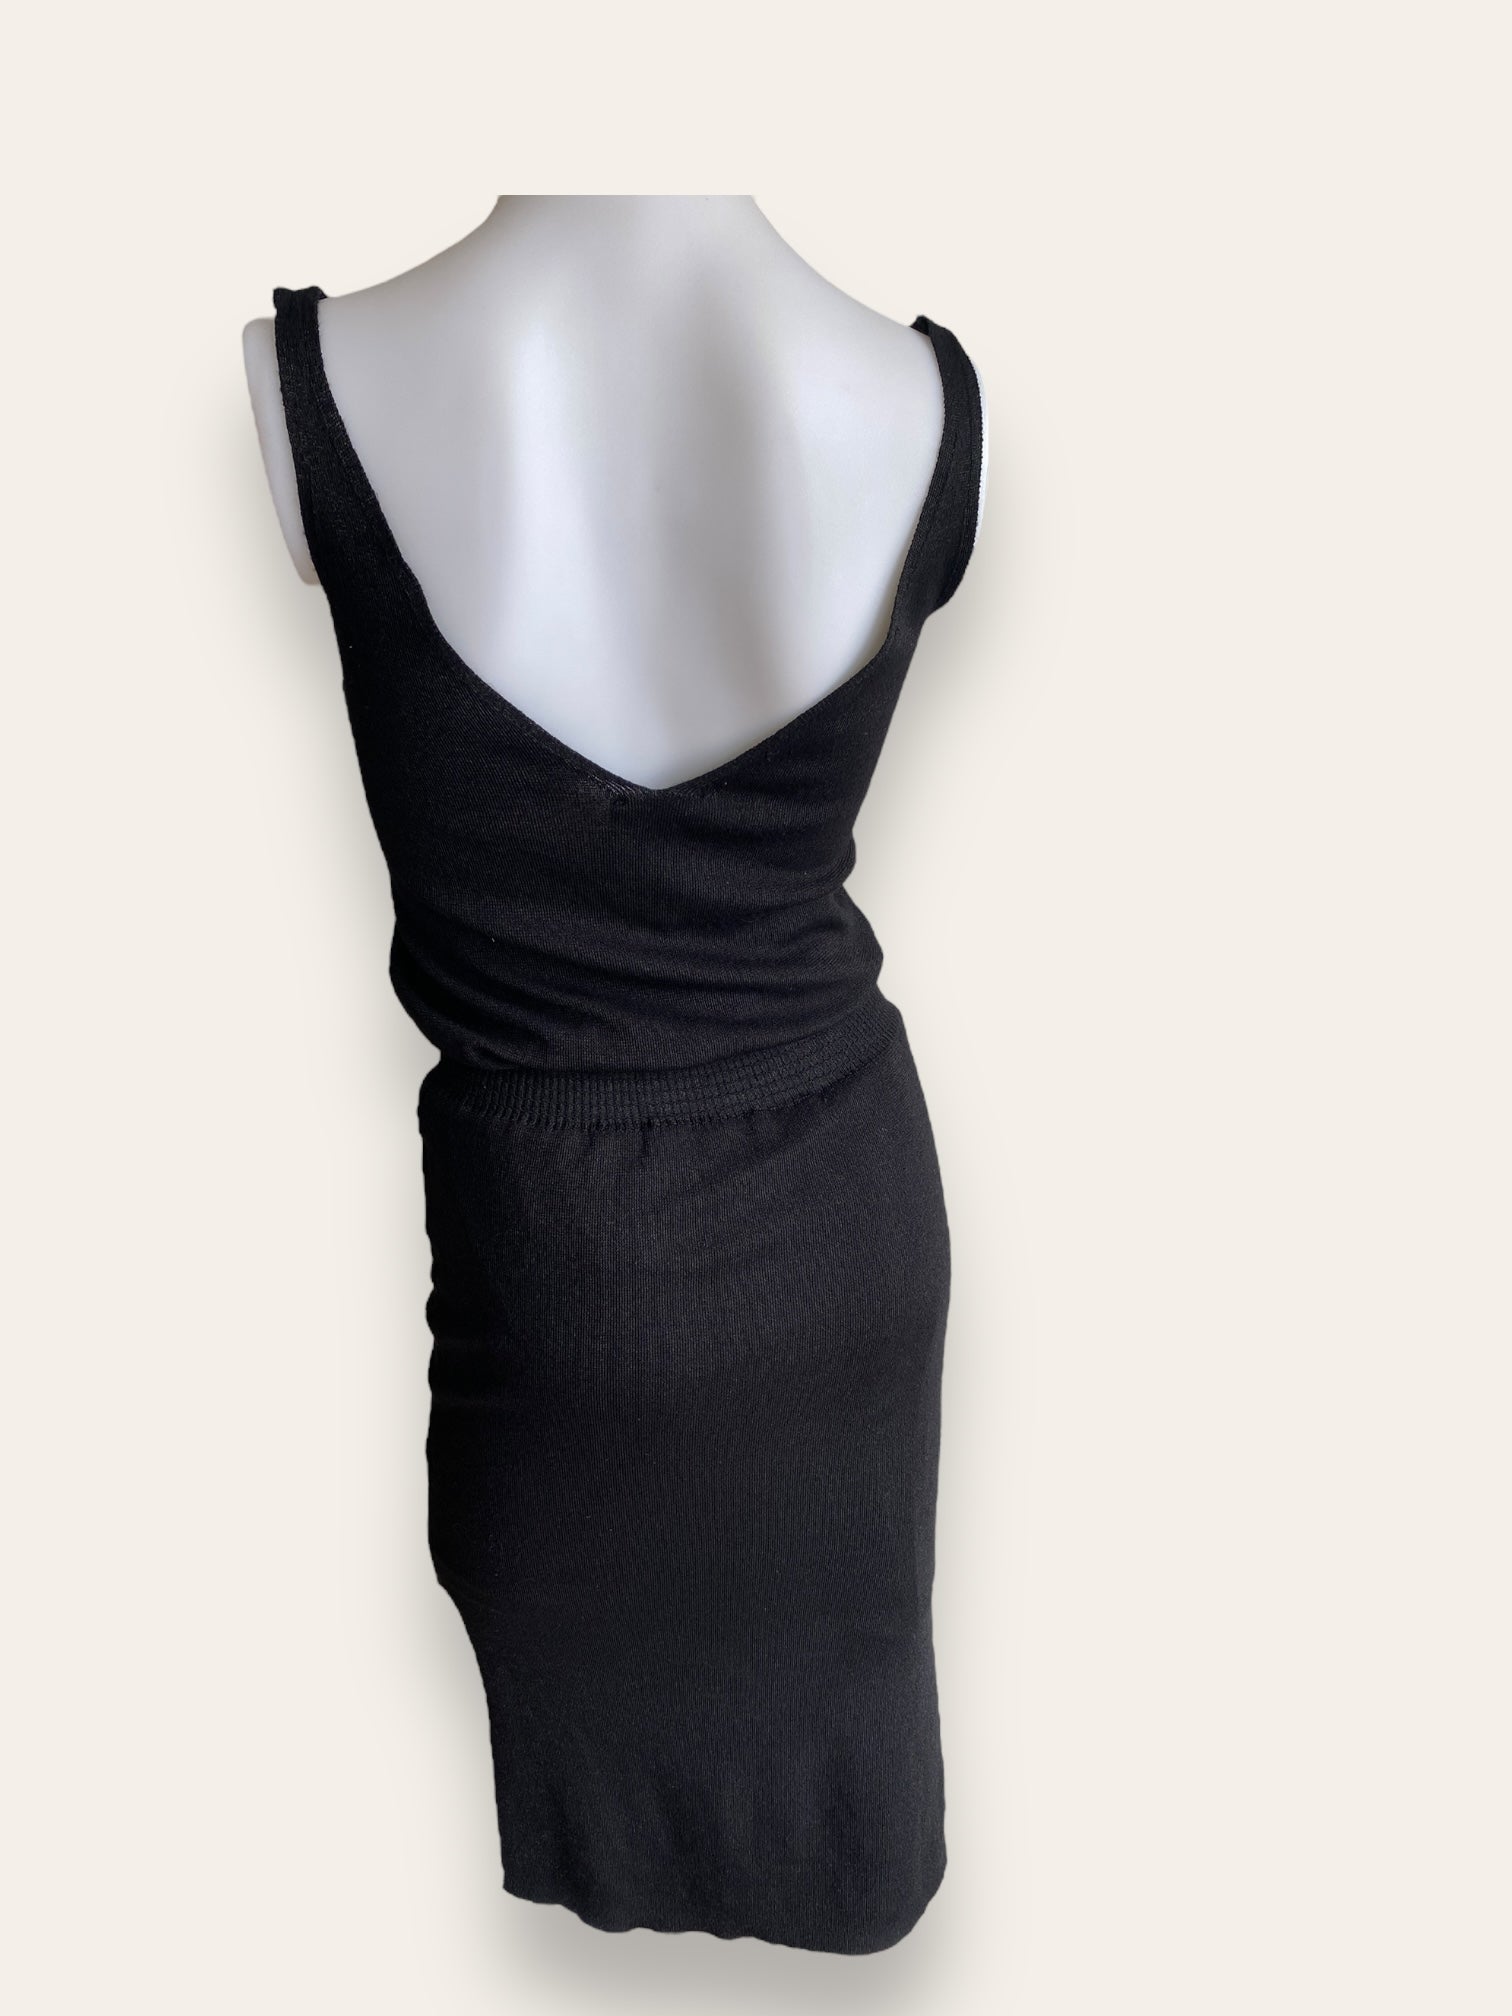 ZARA black knit sleeveless dress M